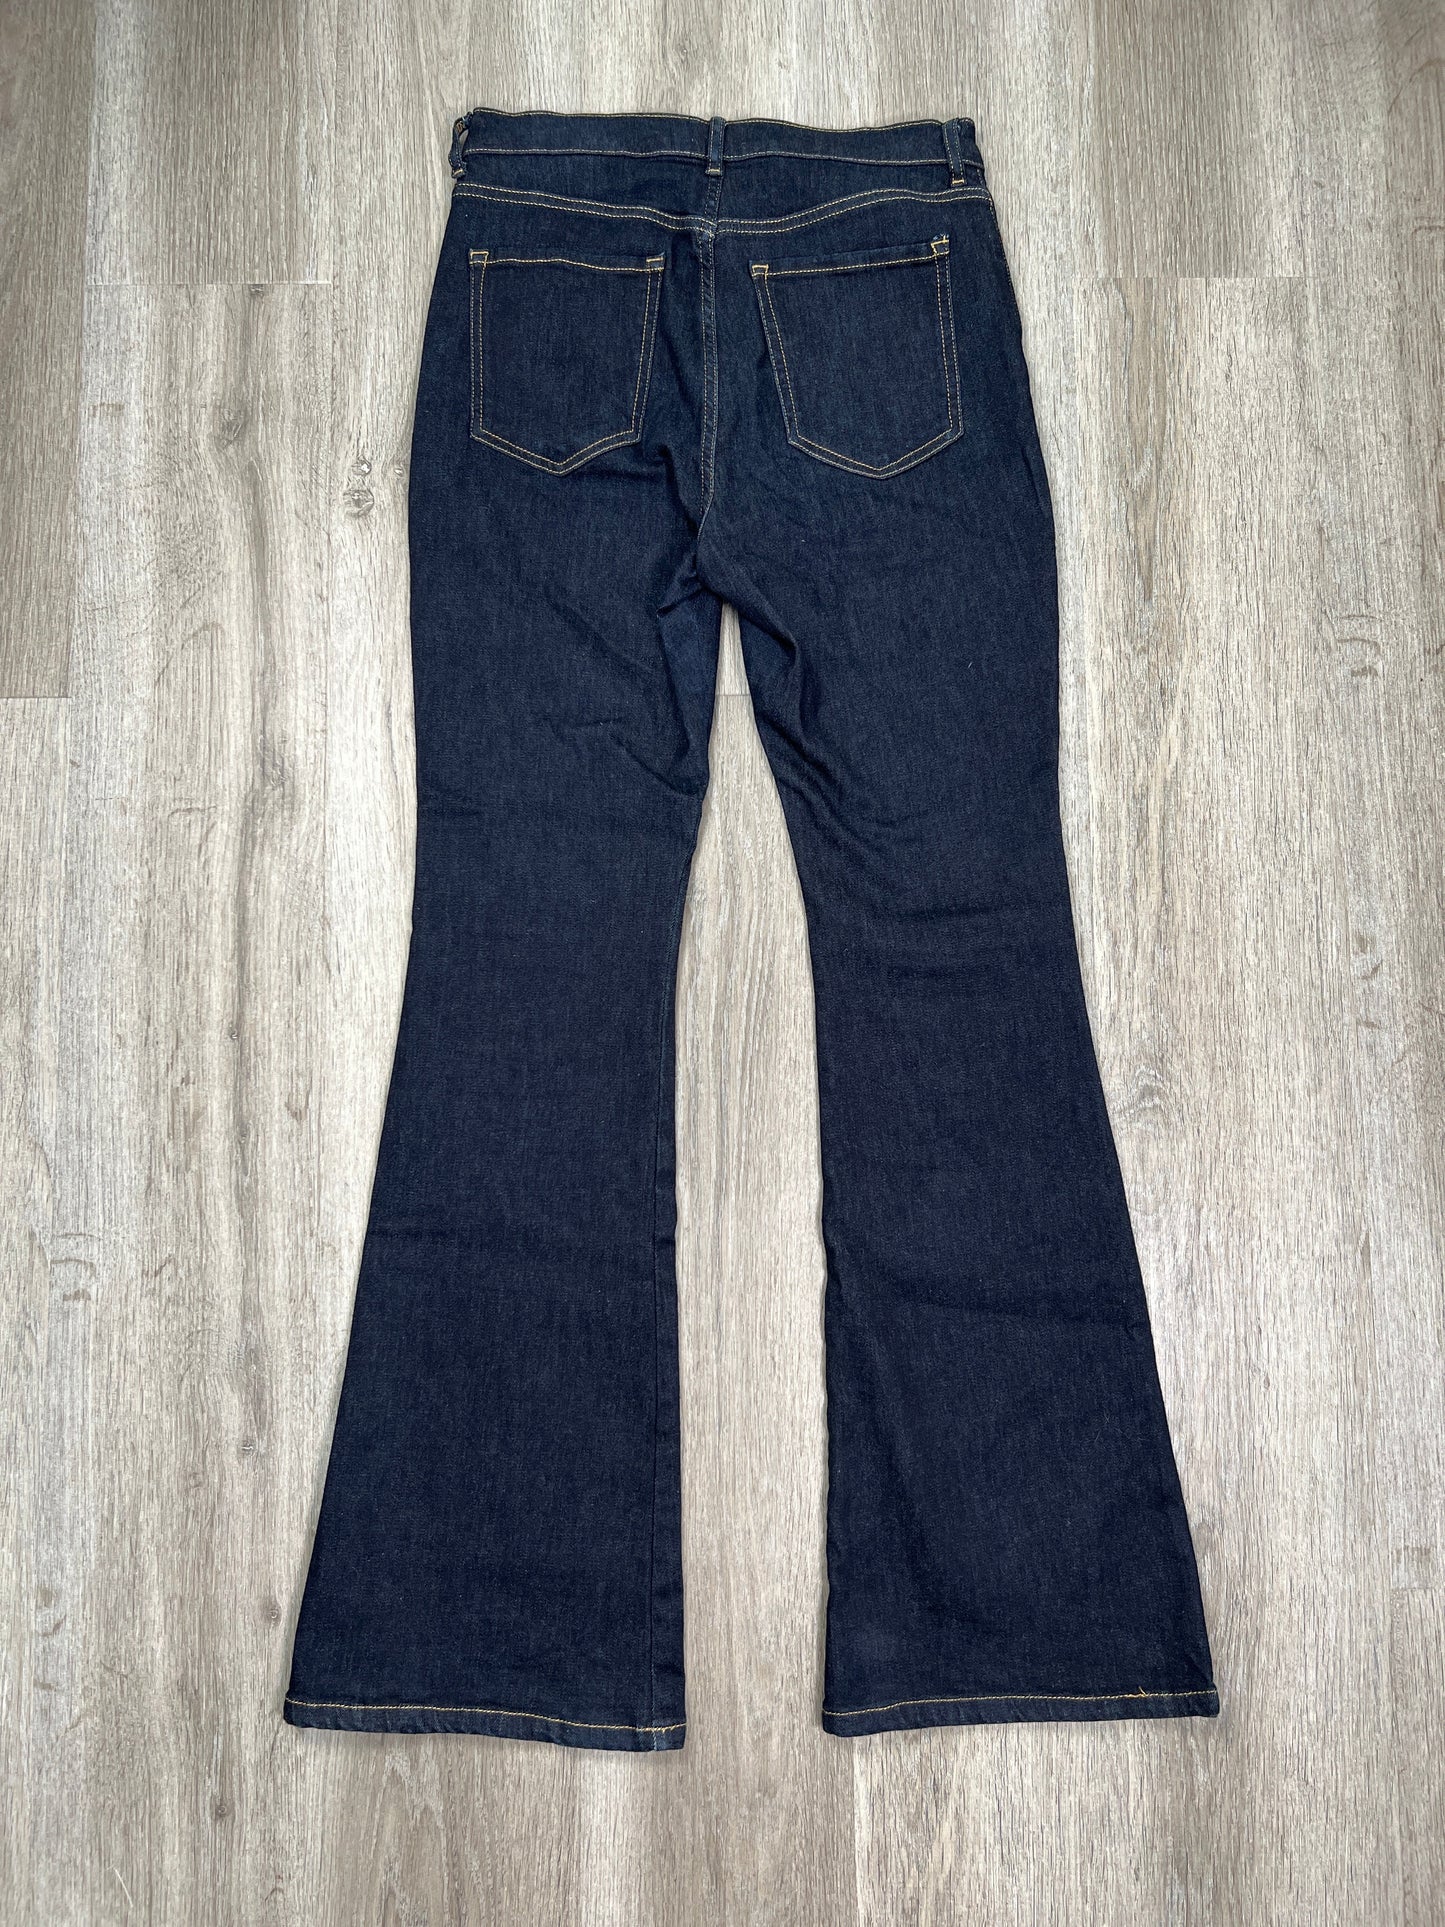 Blue Denim Jeans Flared Banana Republic, Size 6